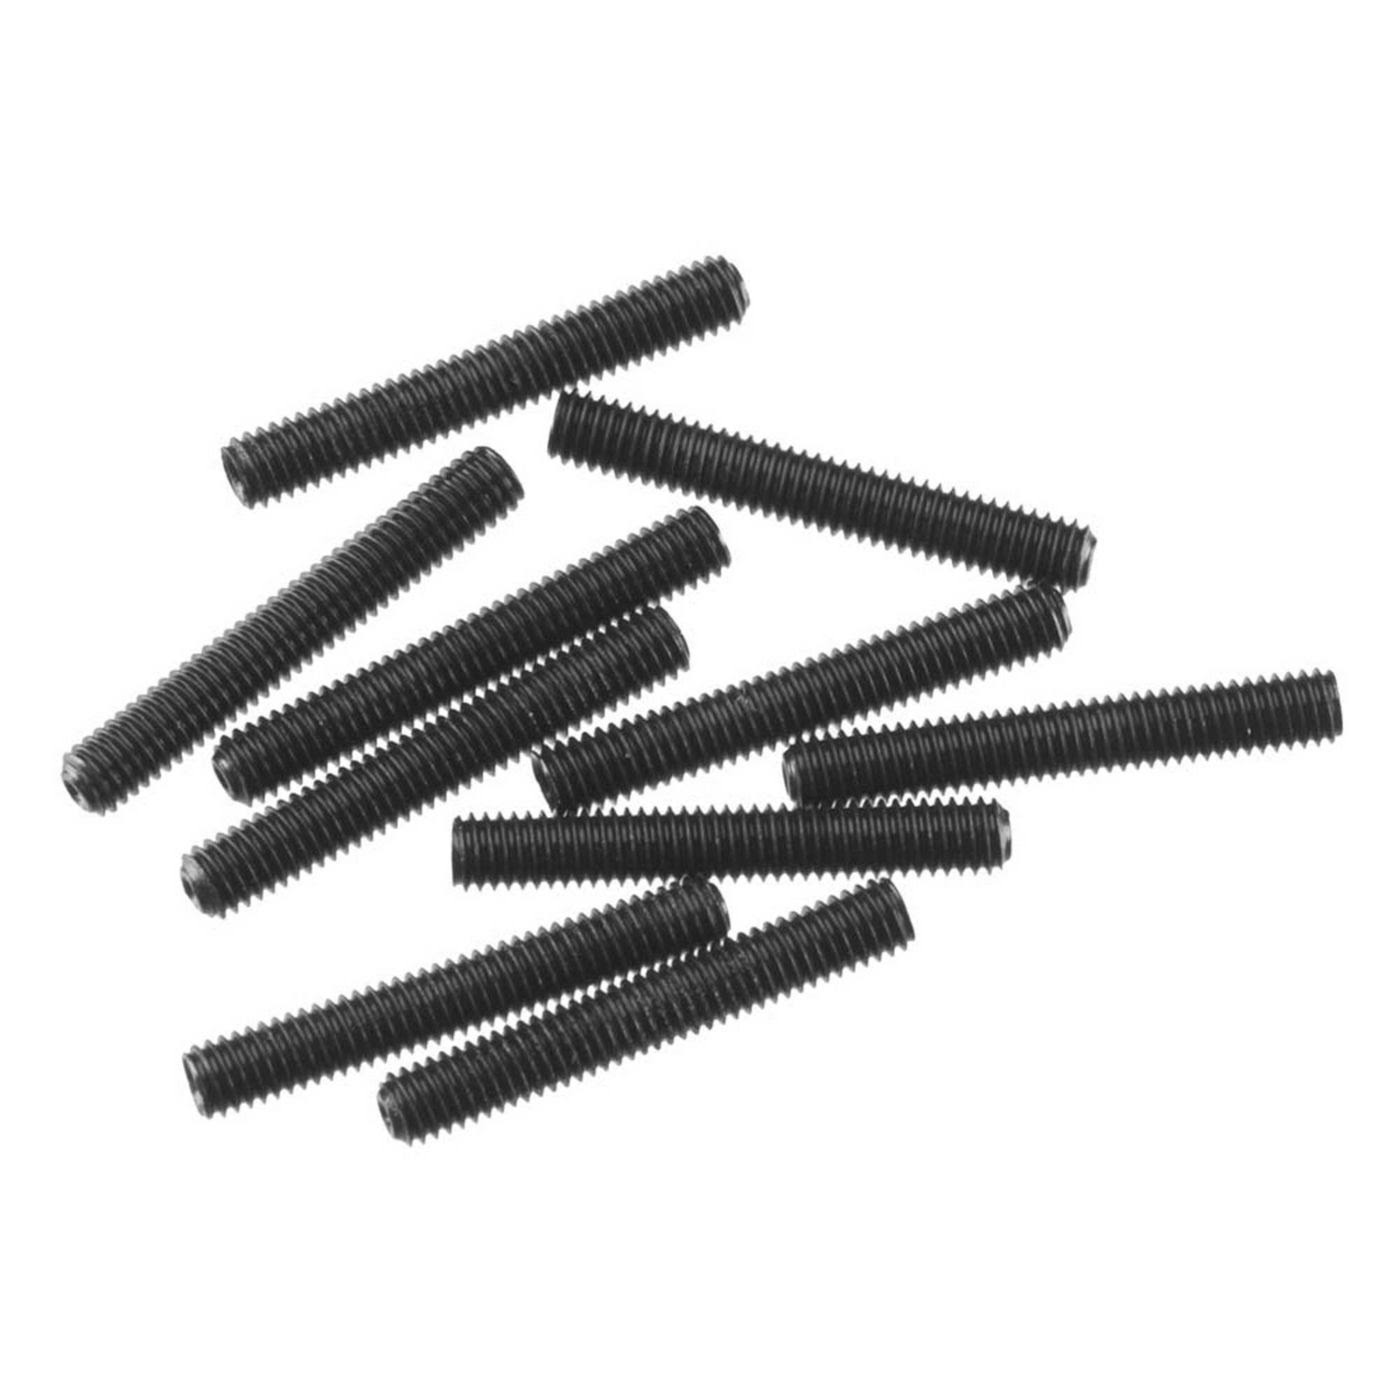 Axial AXA0187 Set Screw - Black, M3 x 20mm, 10 Pieces